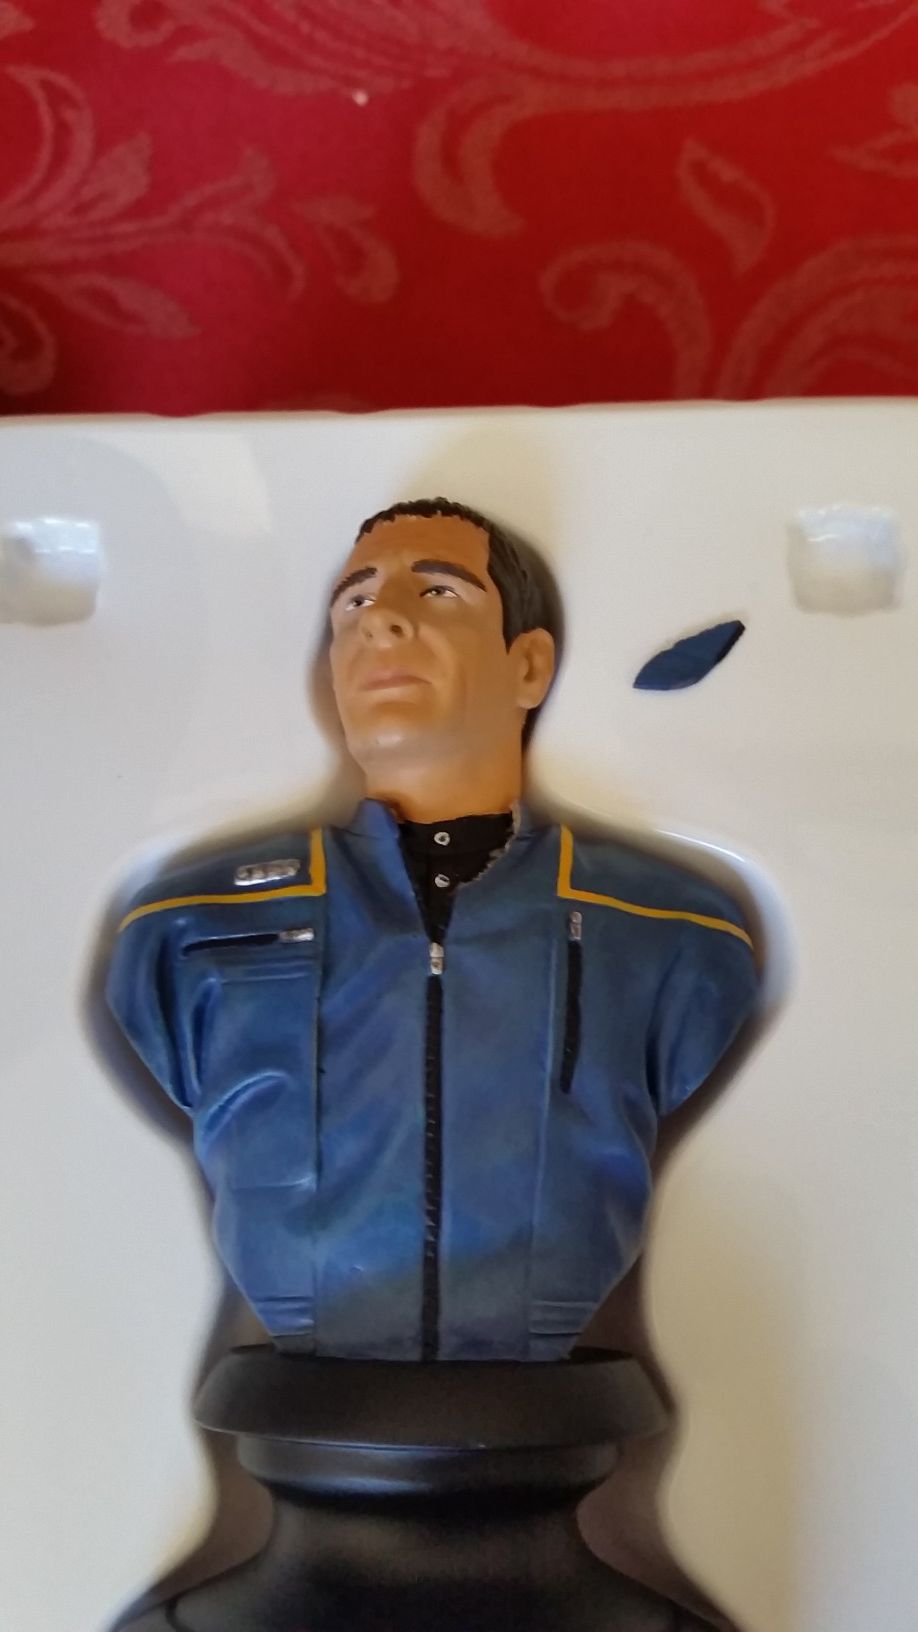 $5 Star Trek Figure As Is - Pura Vida